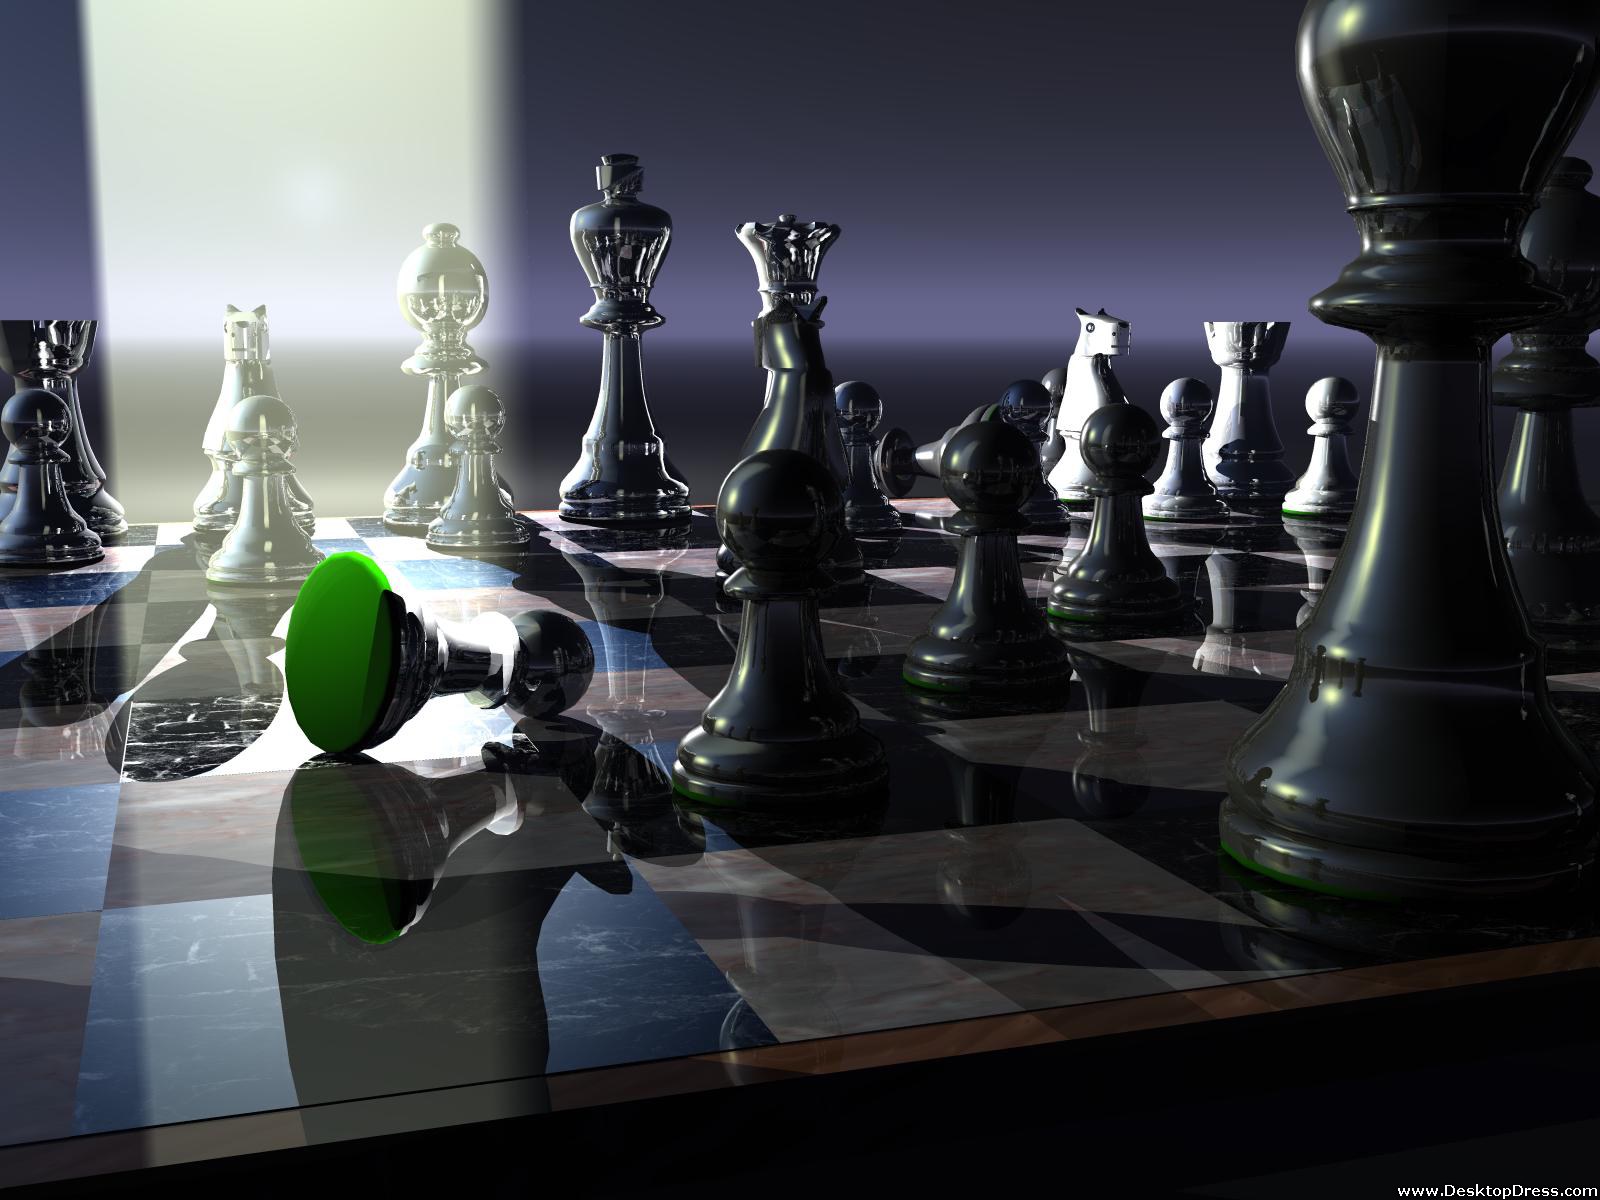 Desktop Wallpapers » 3D Backgrounds » Green Chess Board »